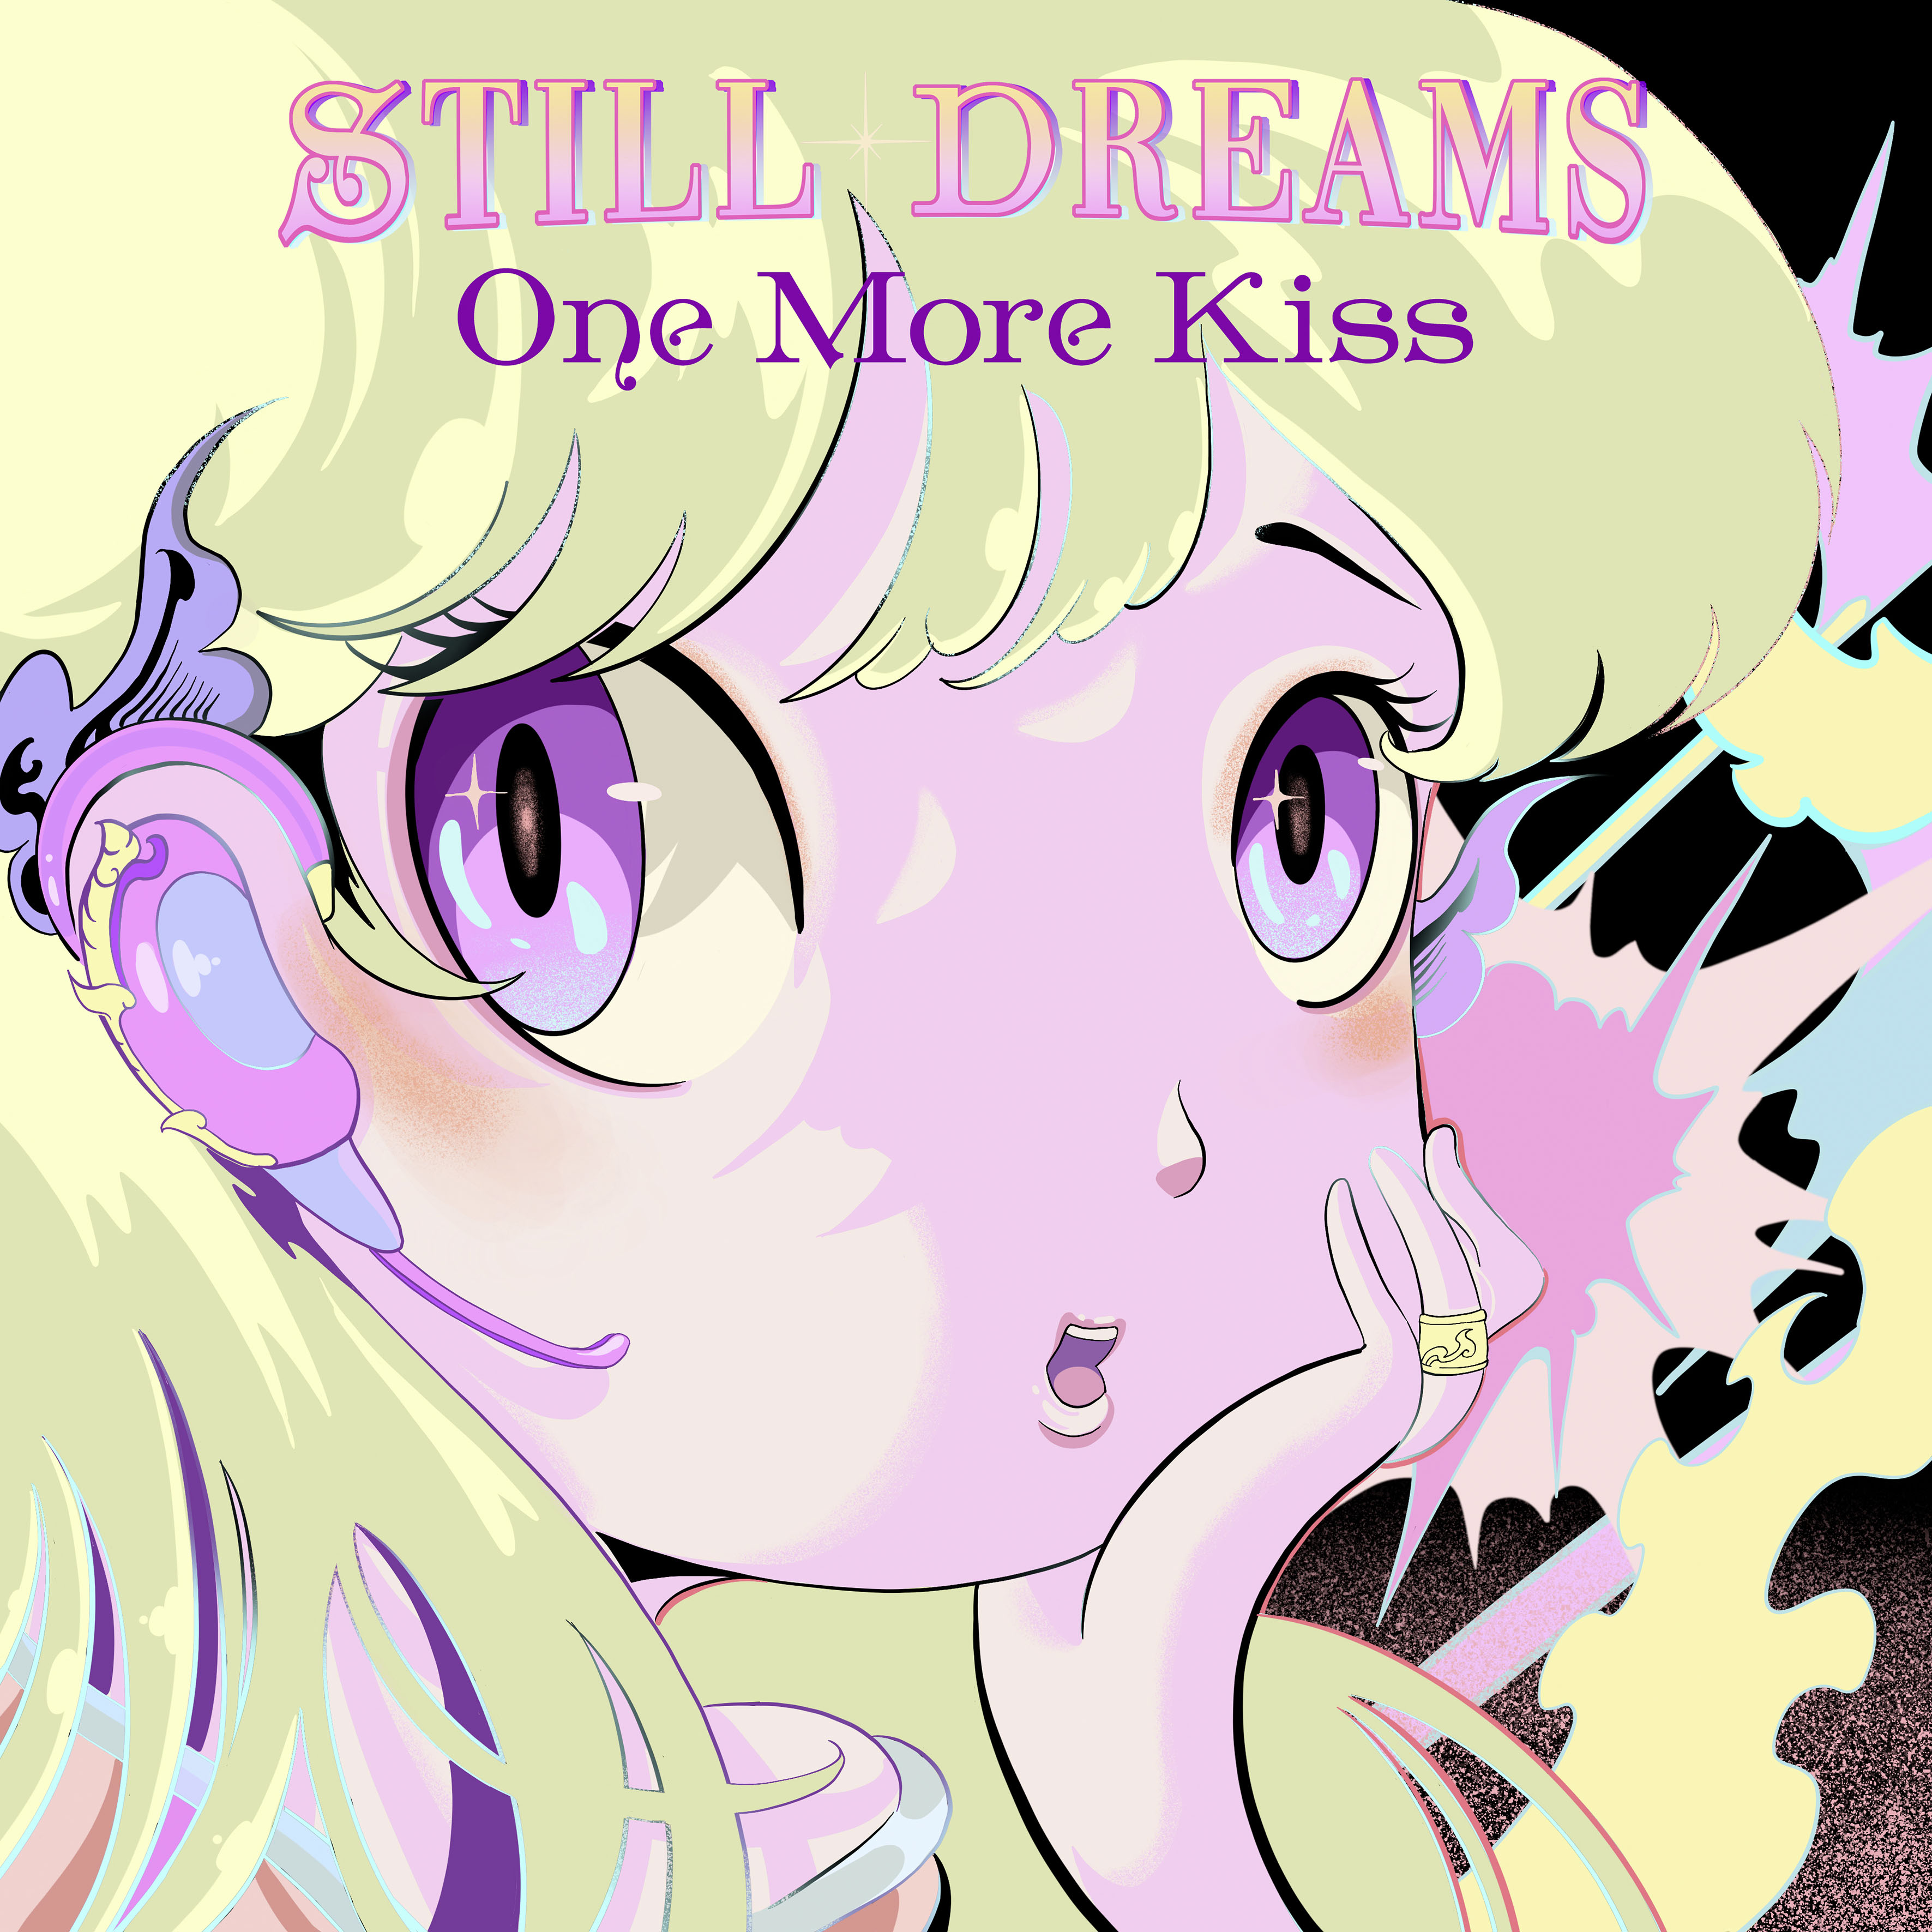 STILL DREAMS "One More Kiss" Single Digital